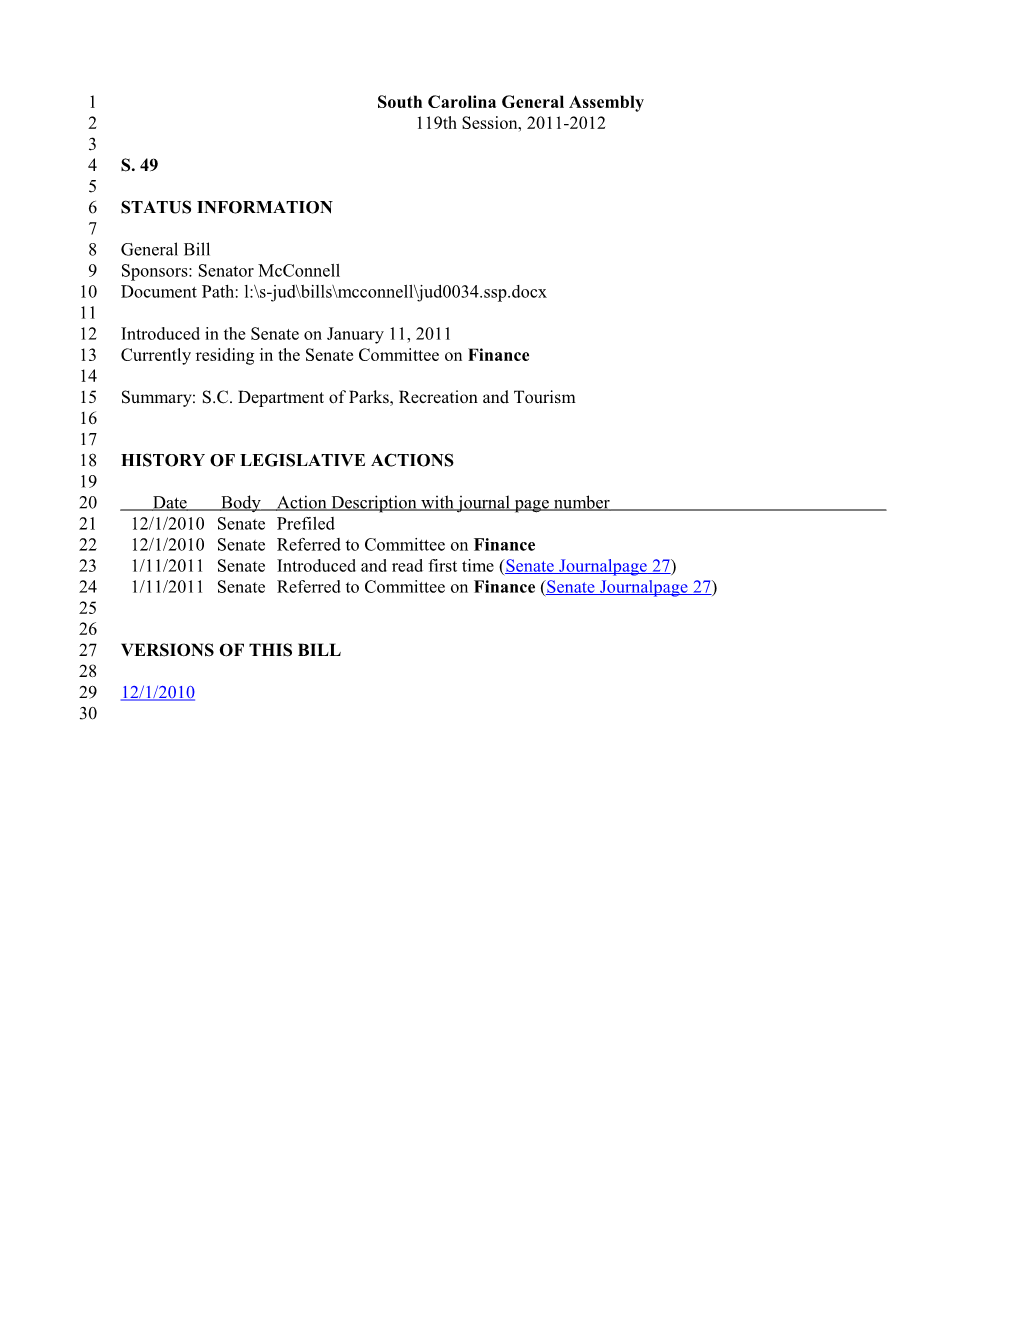 2011-2012 Bill 49: S.C. Department of Parks, Recreation and Tourism - South Carolina Legislature